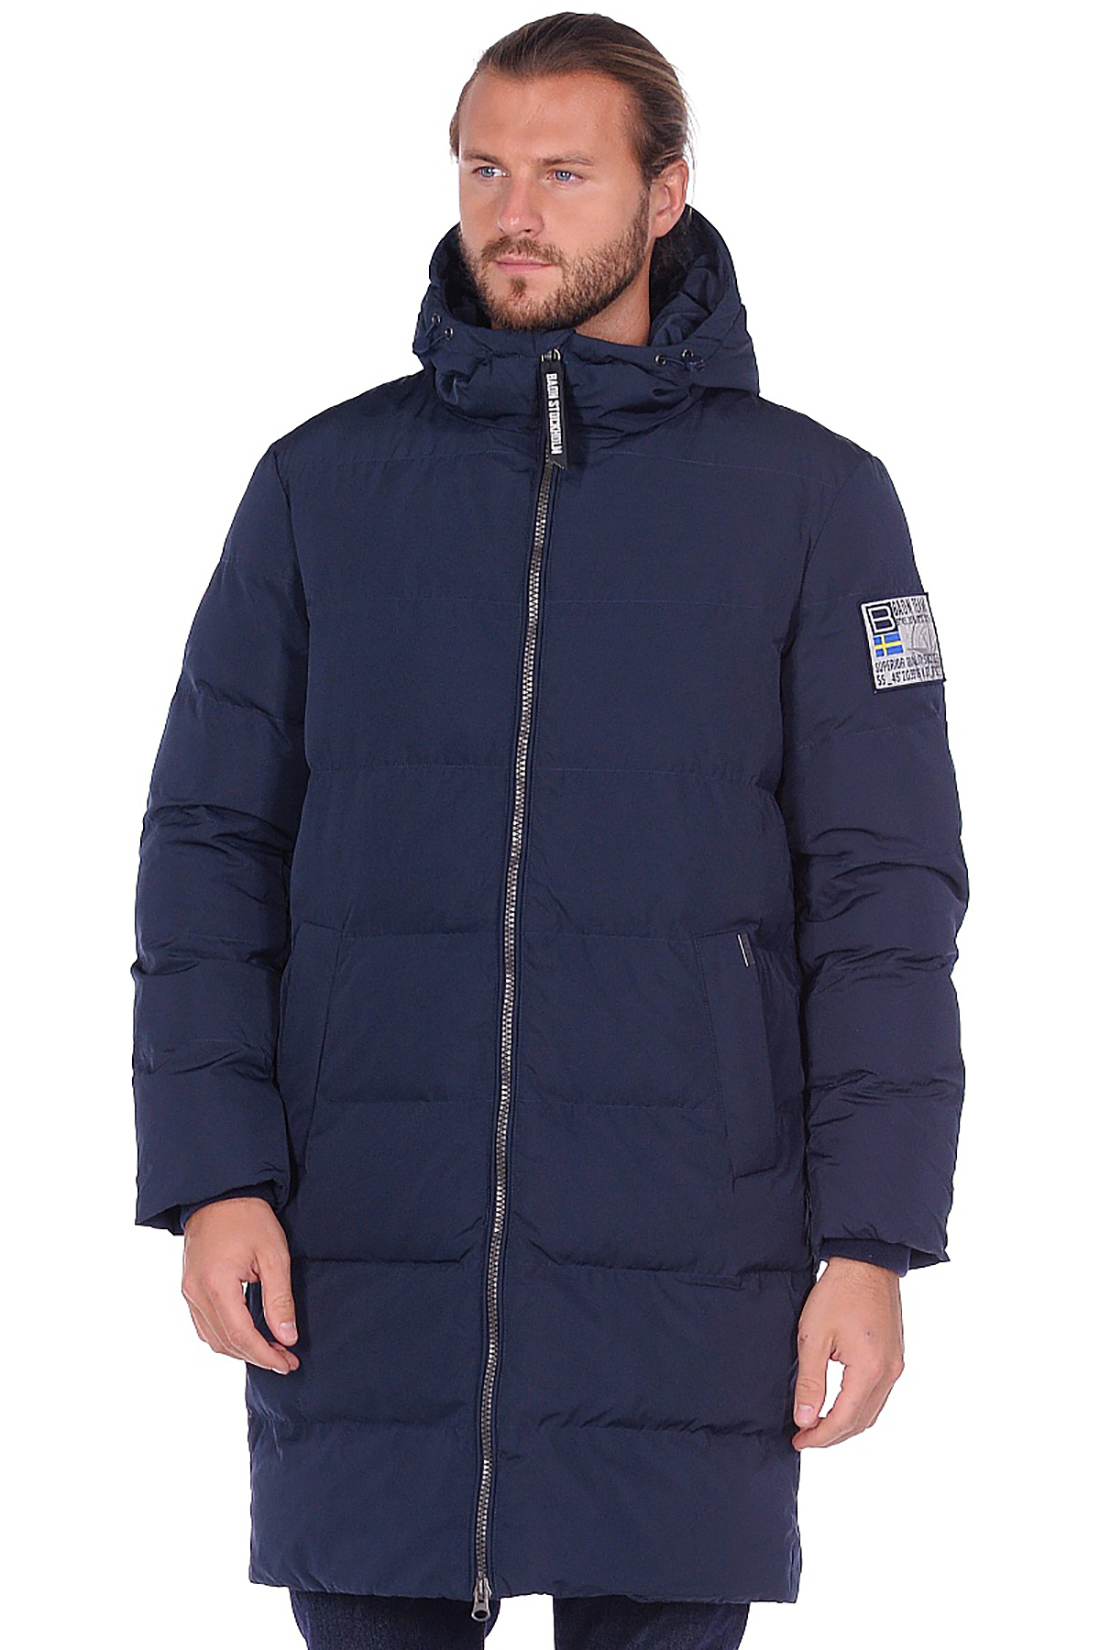 Длинная куртка с фирменными шевронами (арт. baon B539545), размер L, цвет синий Длинная куртка с фирменными шевронами (арт. baon B539545) - фото 1